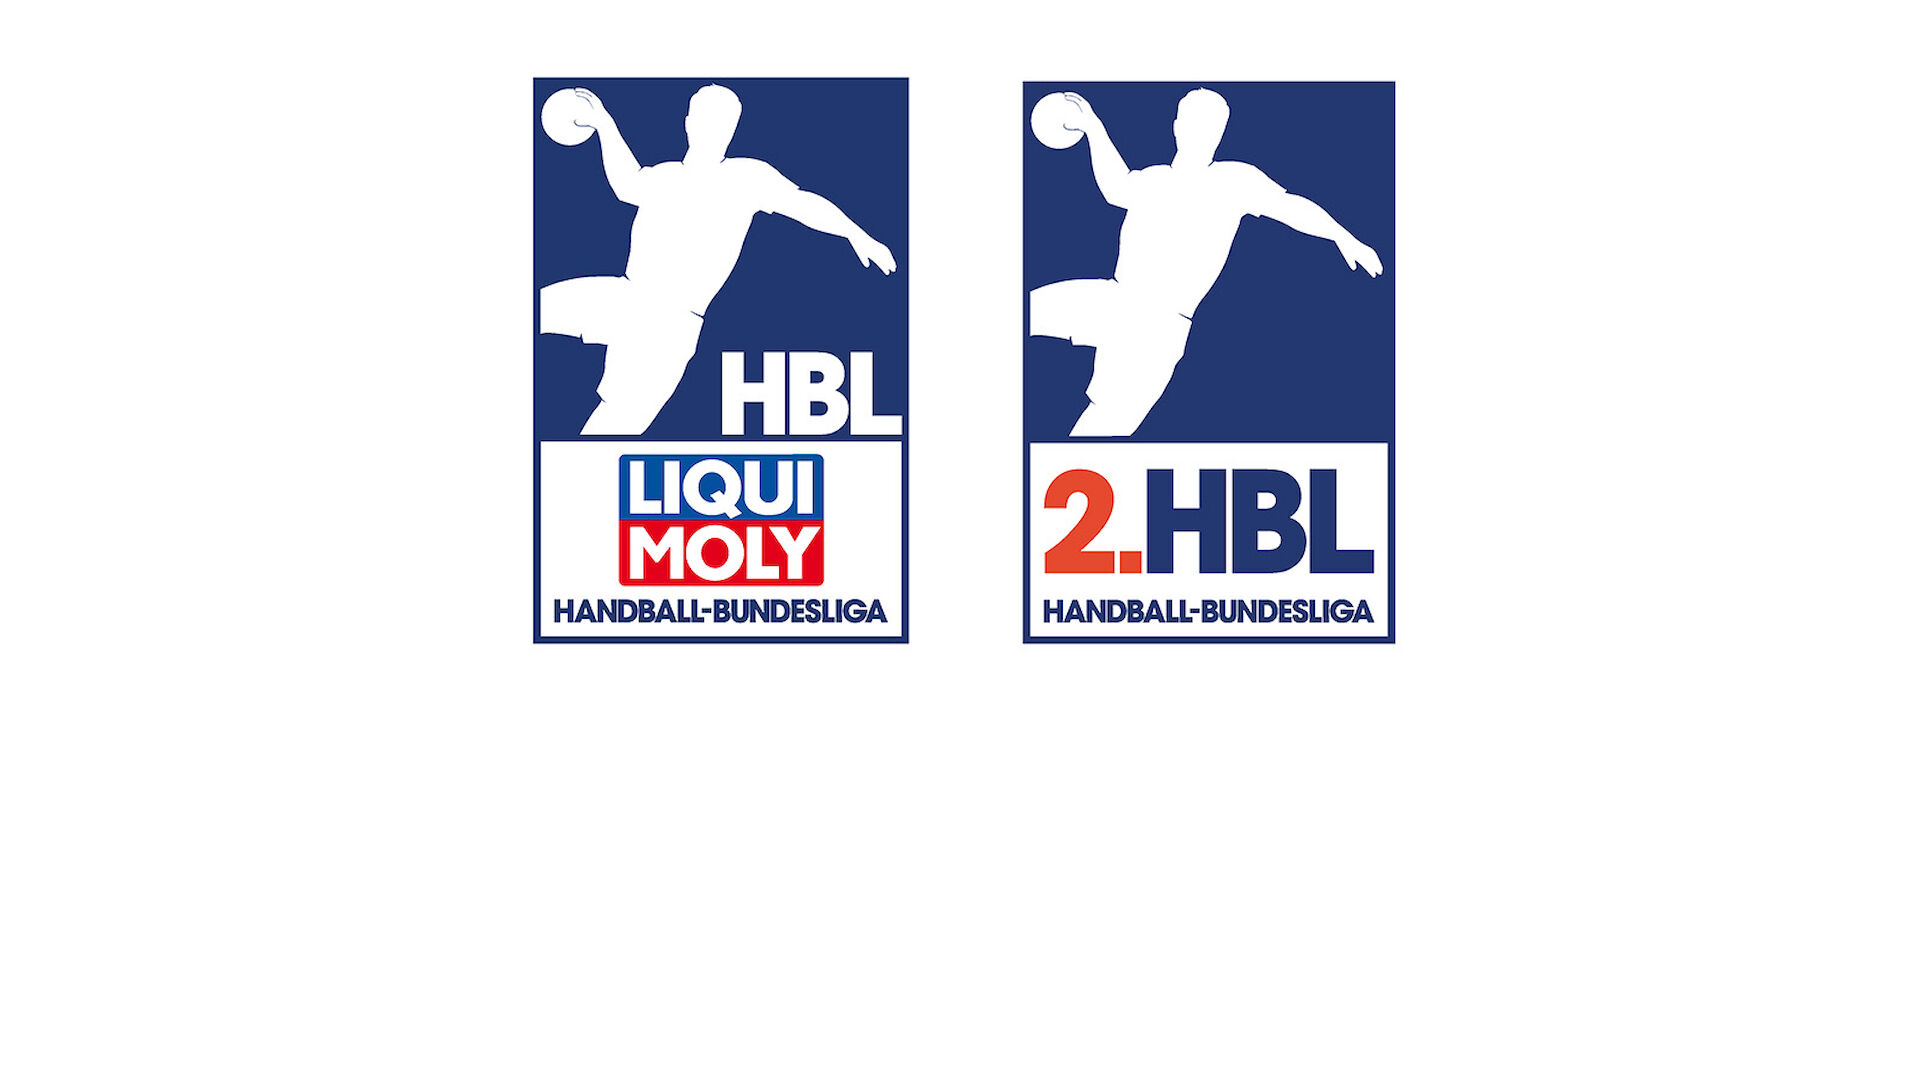 Corona-Pandemie zwingt Handball-Bundesligen zu vorzeitigem Saisonabbruch LIQUI MOLY HBL